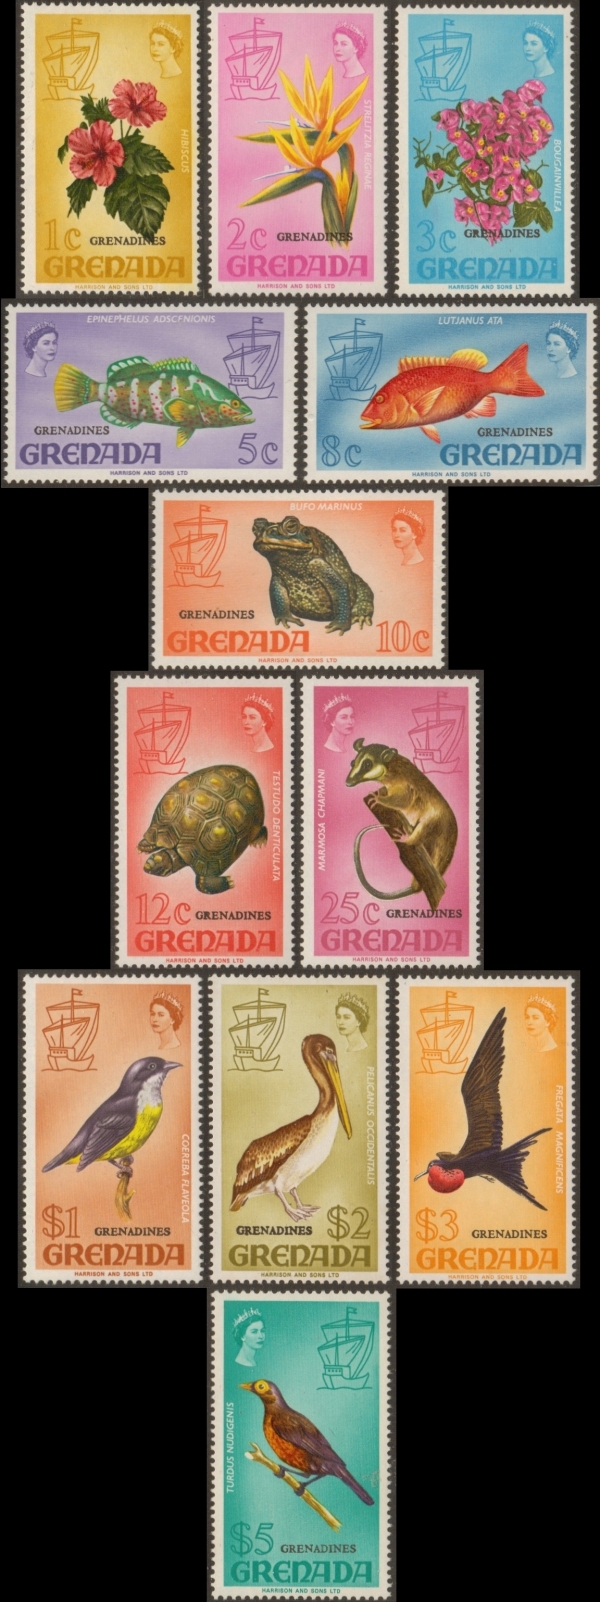 1974 Various 1968-71 Grenada Difinitive Stamps Overprinted GRENADINES